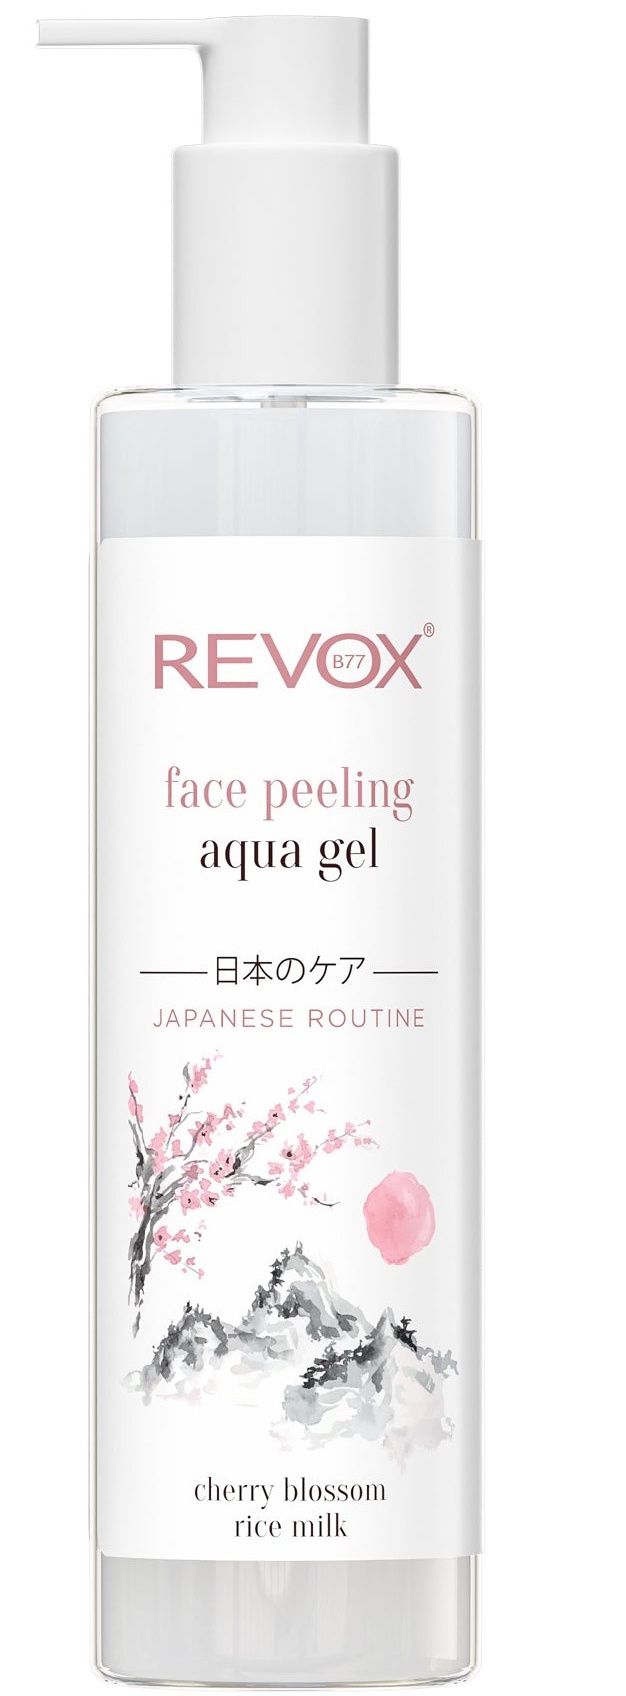 Revox Japanese Routine Face Peeling Aqua Gel